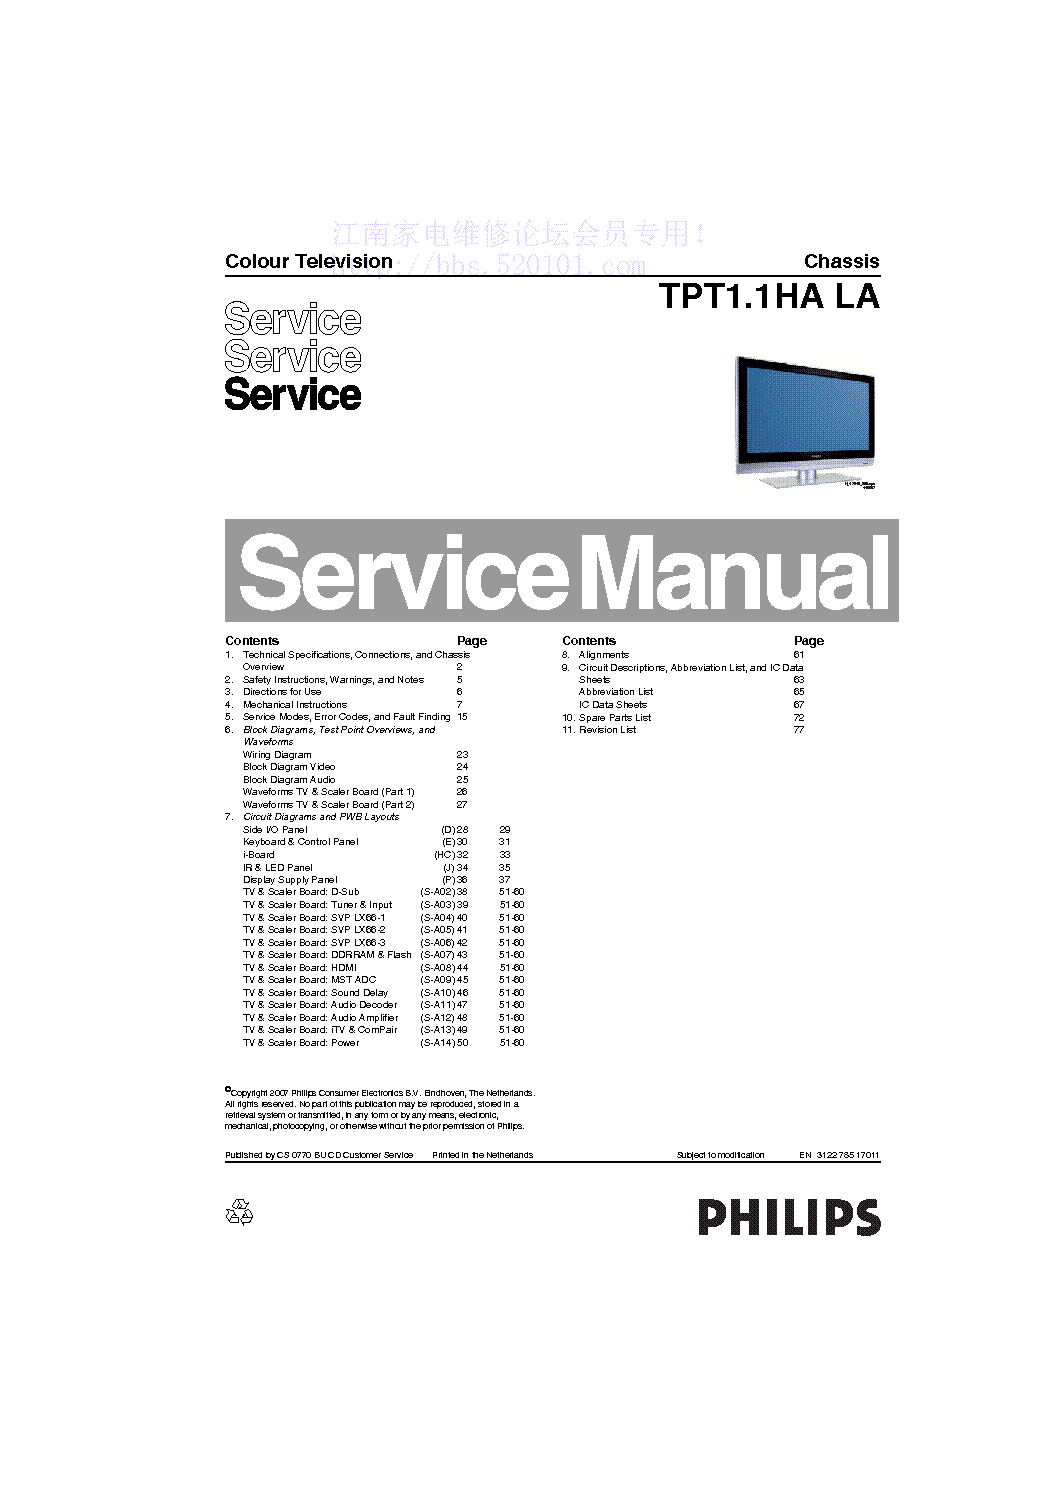 PHILIPS TPT1.1HA-LA CHASSIS SM service manual (1st page)